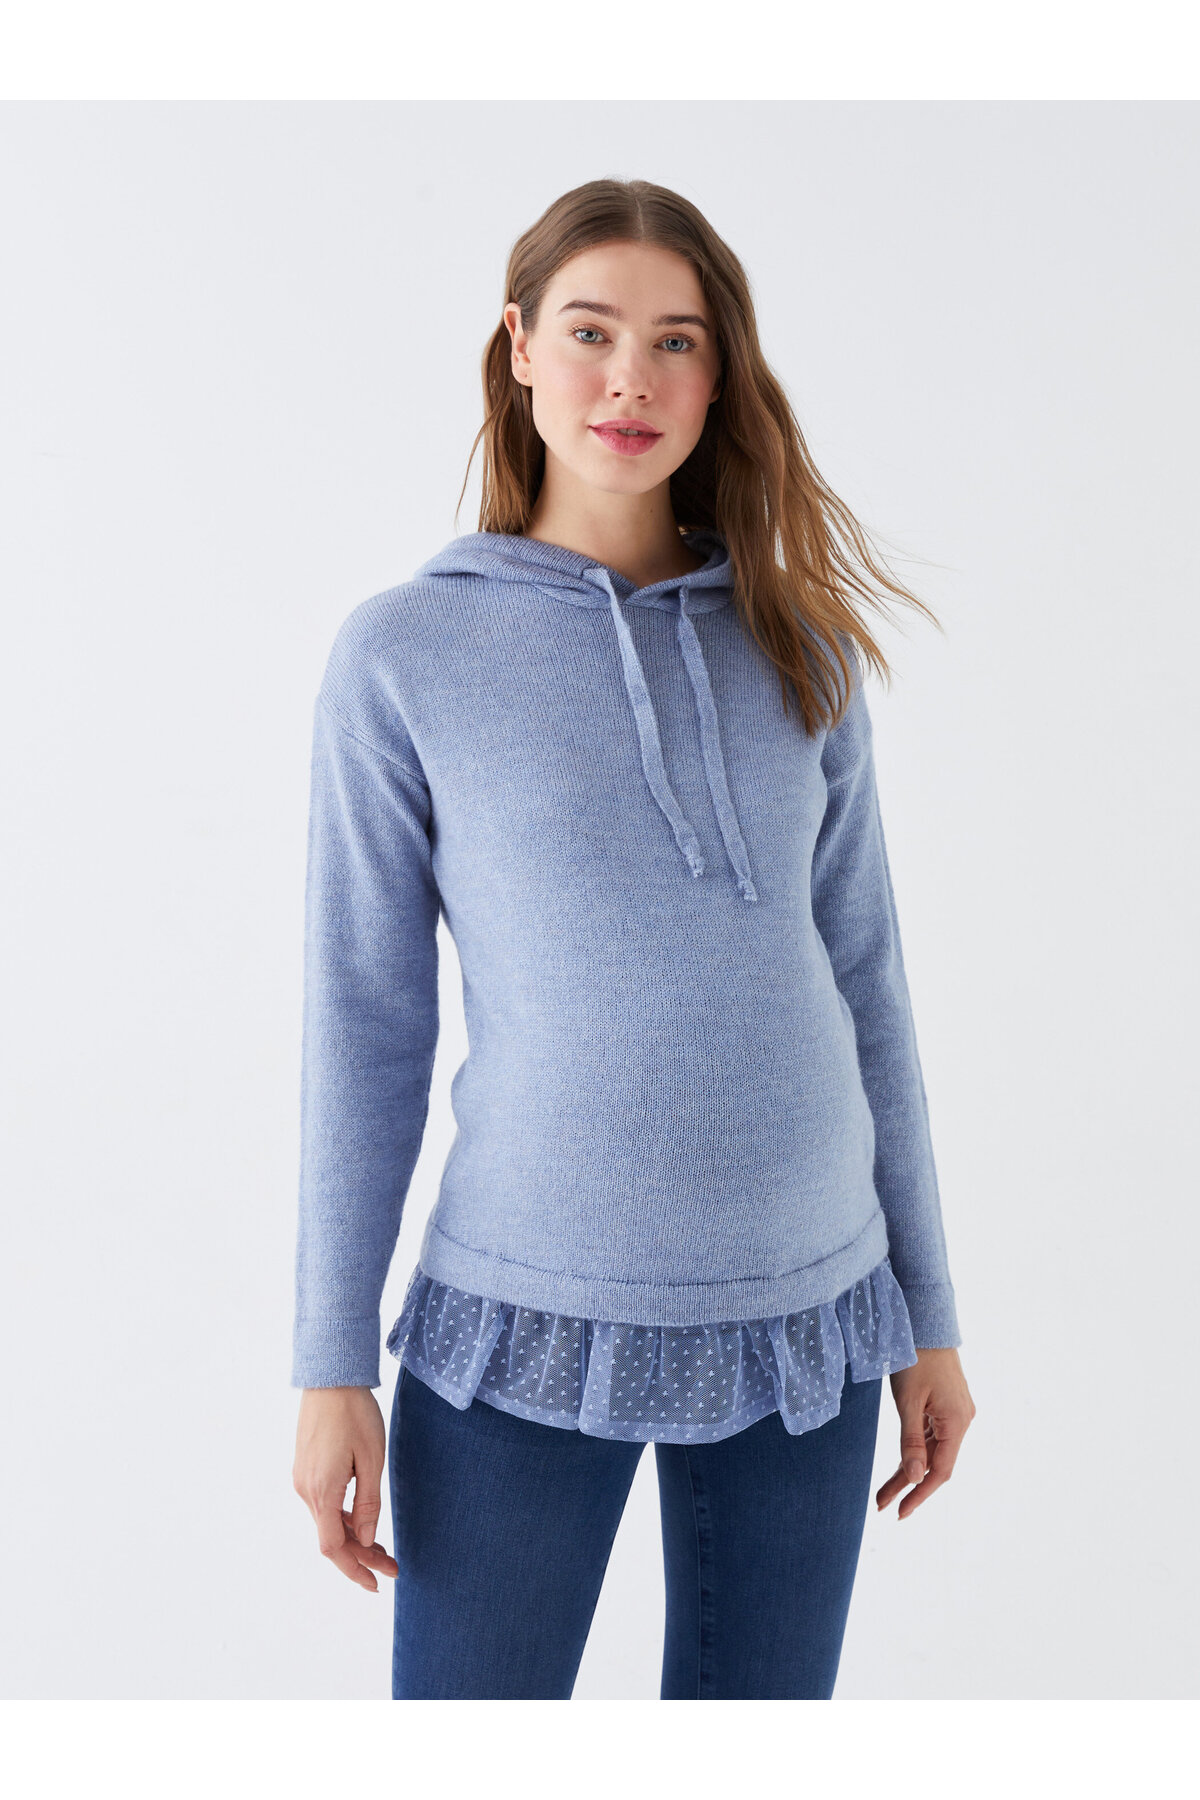 LC Waikiki Hooded Plain Long Sleeve Maternity Knitwear Sweater